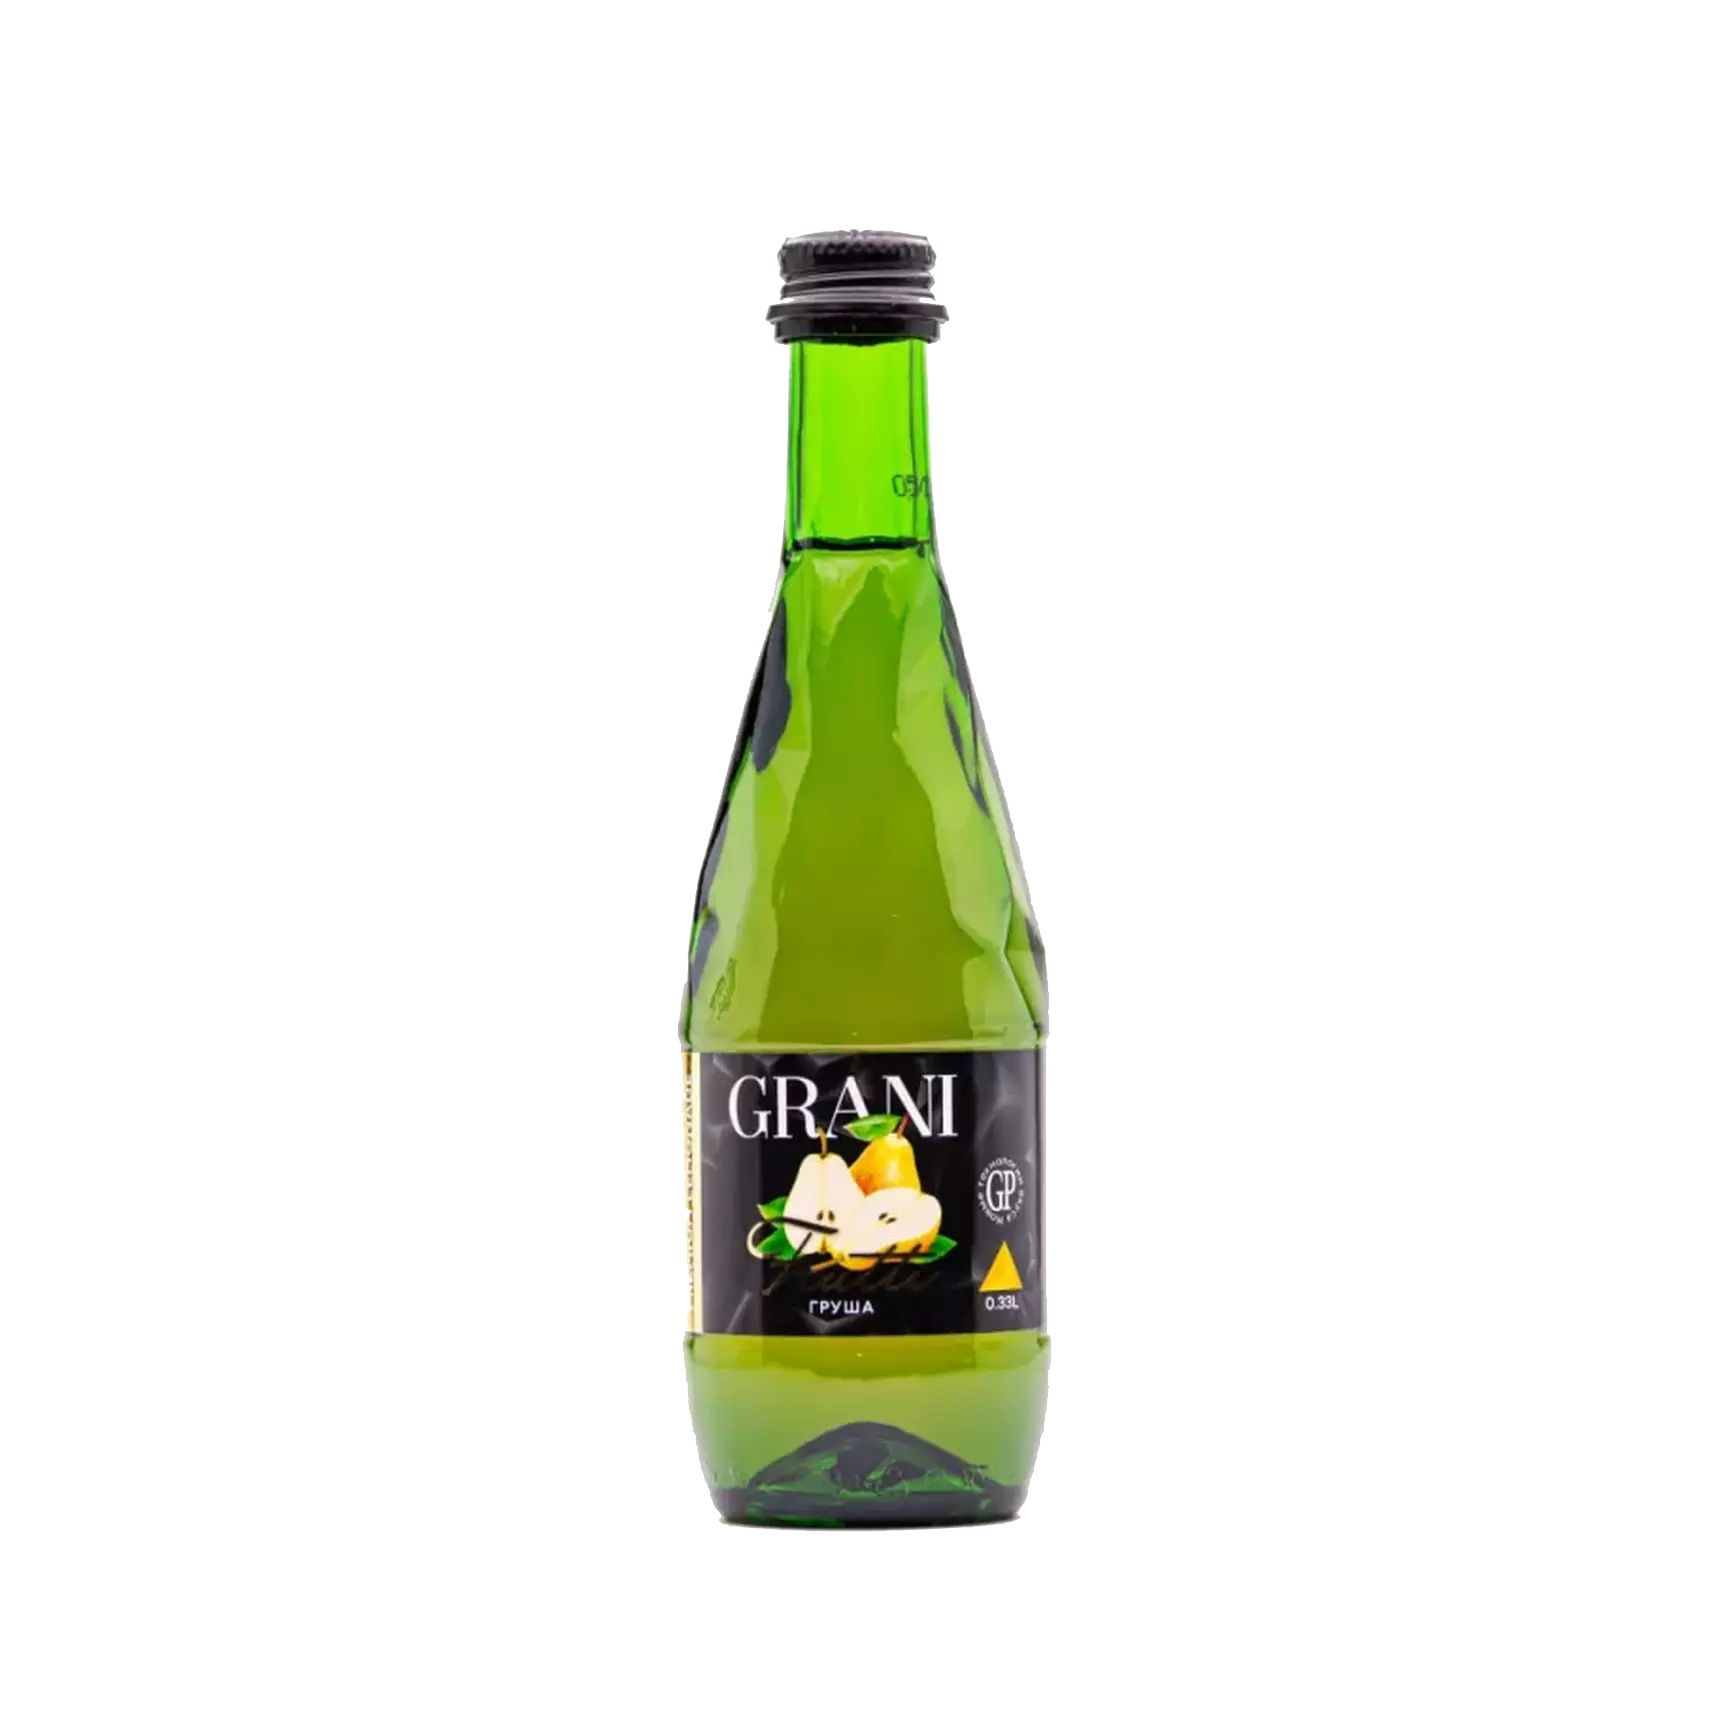 Лимонад Grani Груша 0,33 л лимонад зедазени груша газированный 1 л